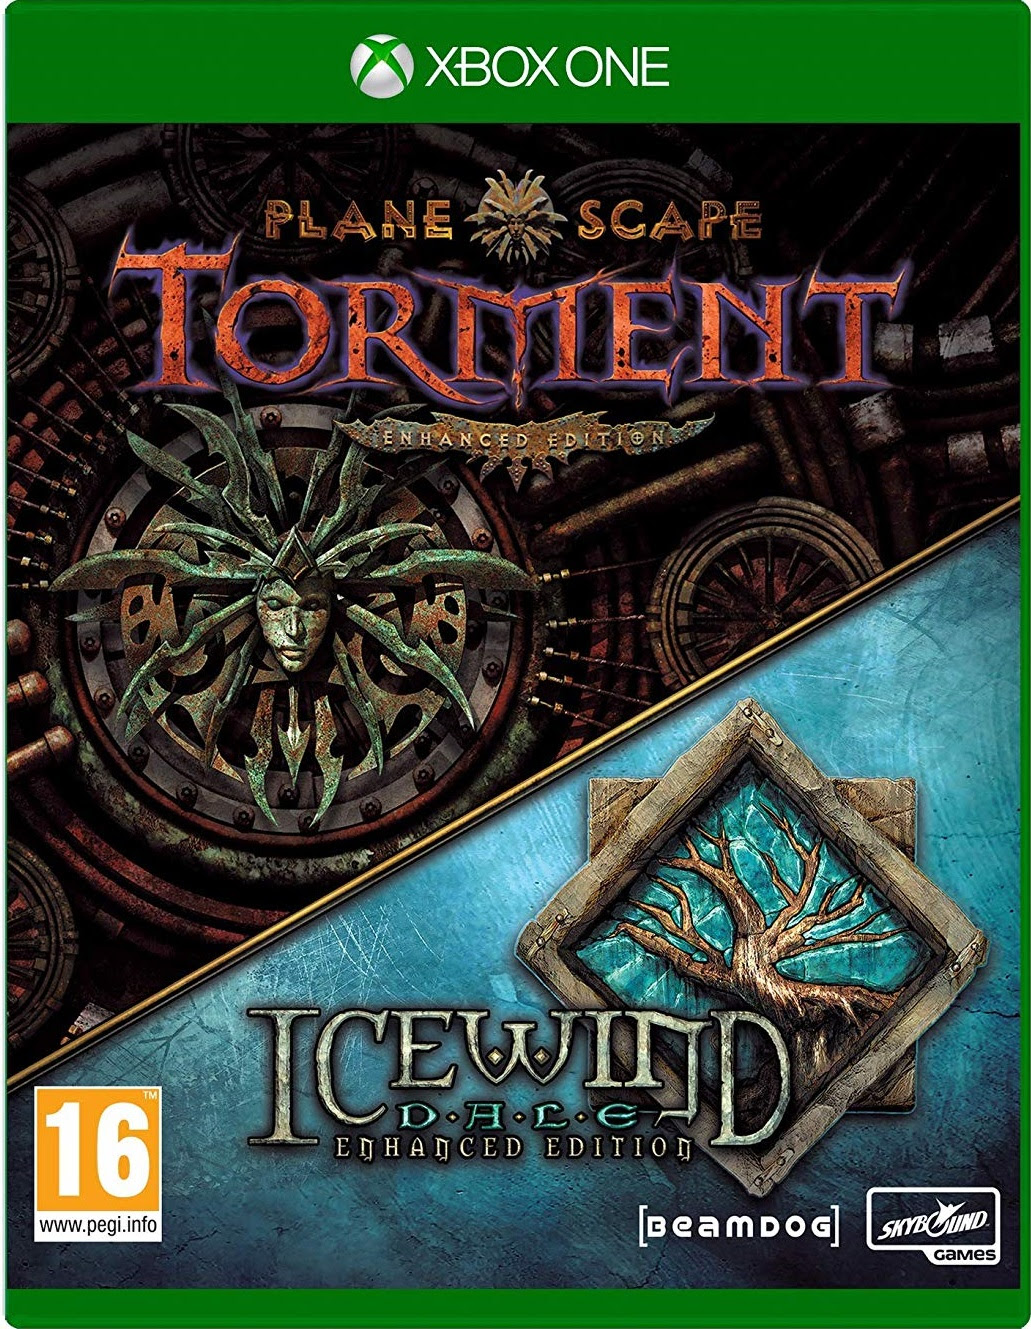 Planescape Torment + Icewind Dale Enhanced Edition - Xbox One Játékok